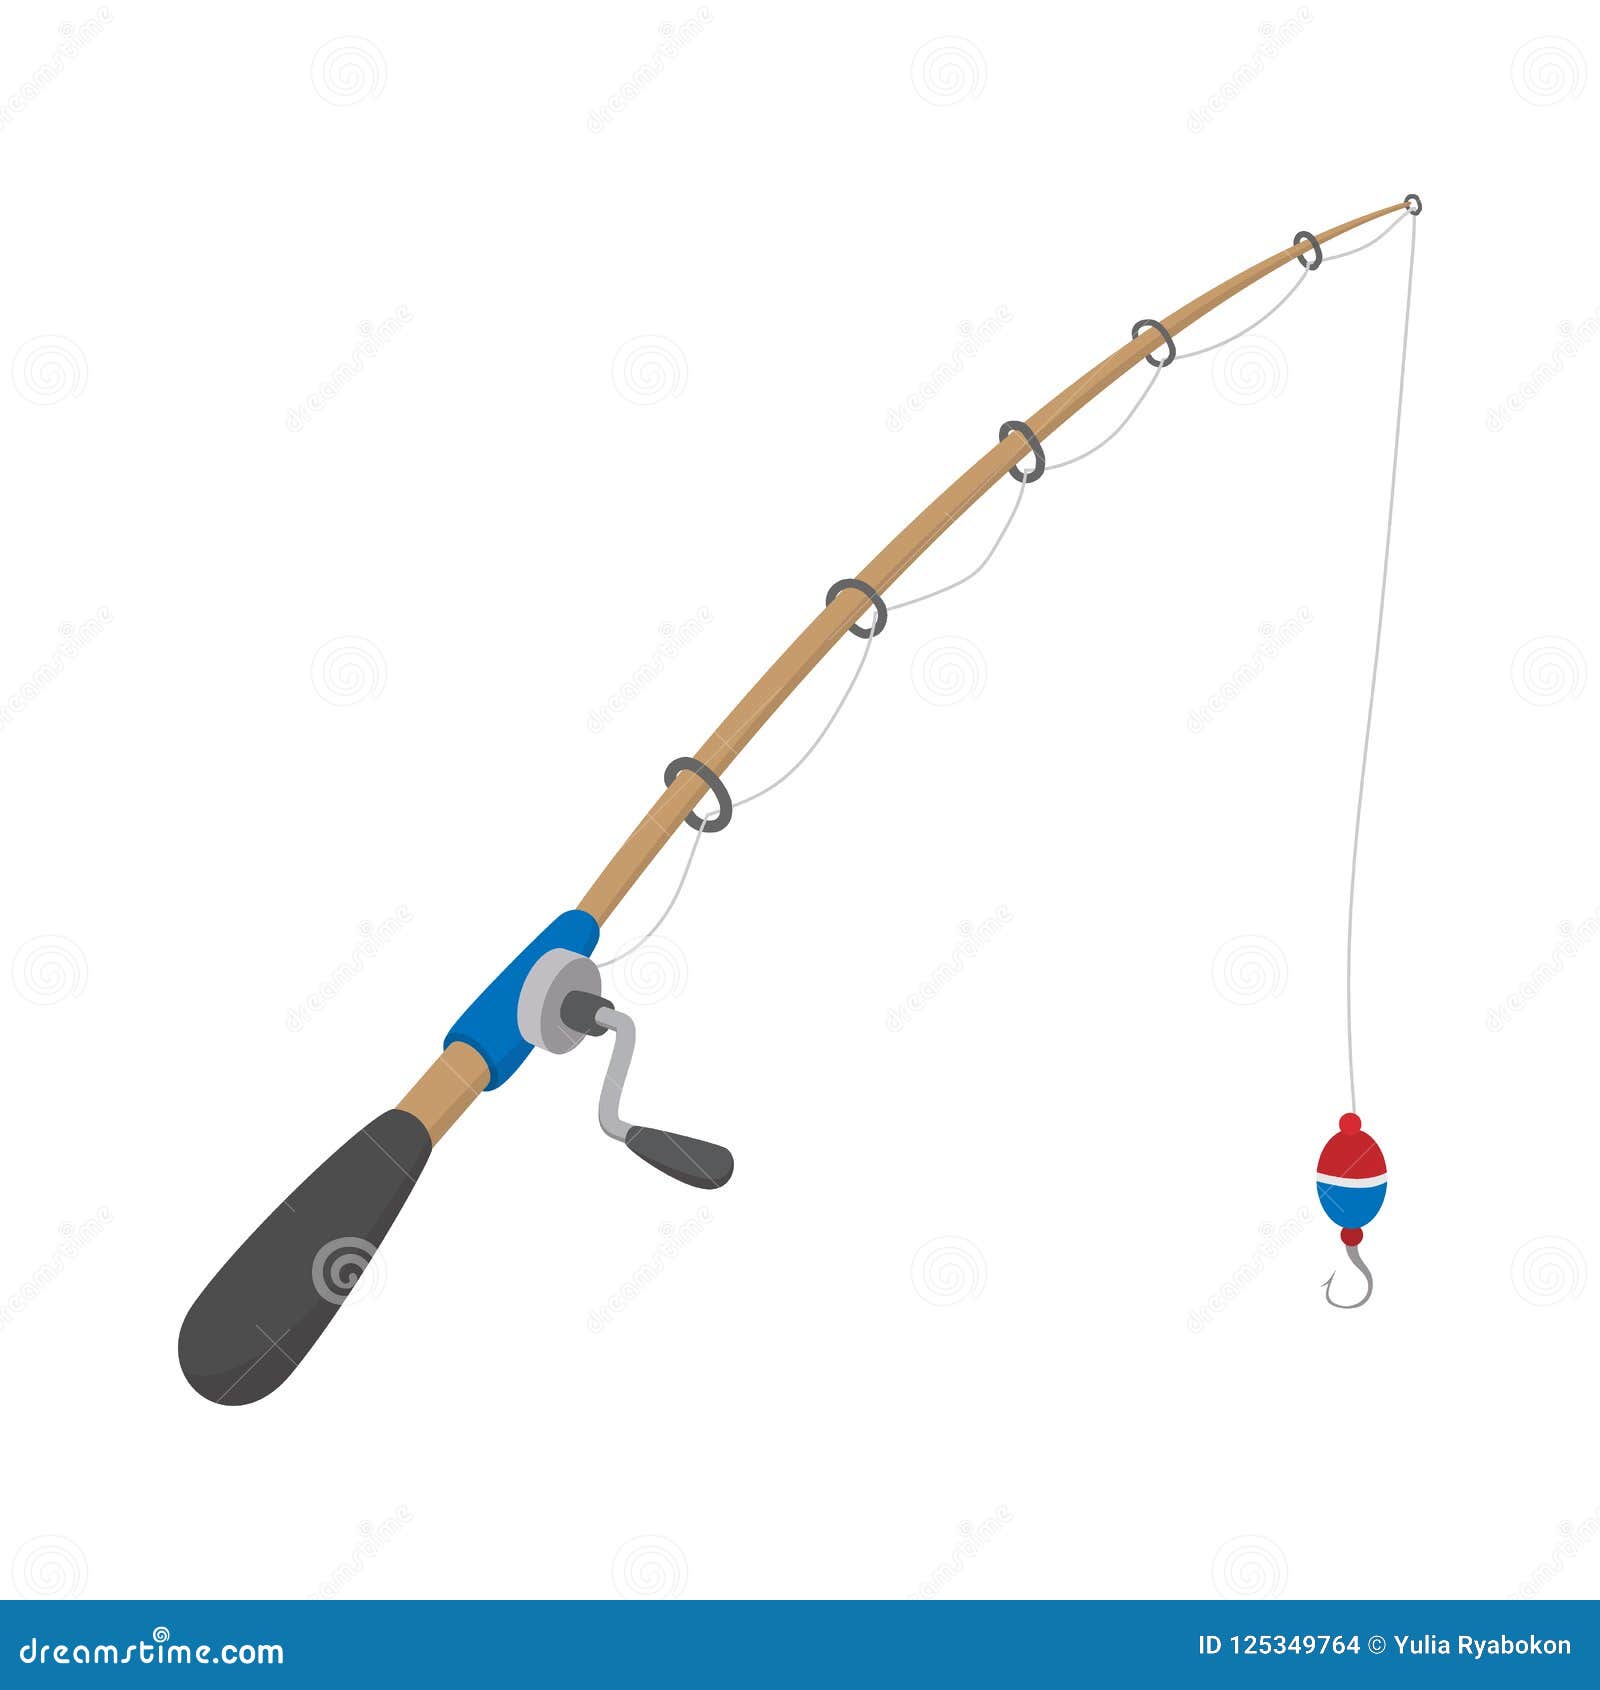 Fishing rod cartoon icon stock illustration. Illustration